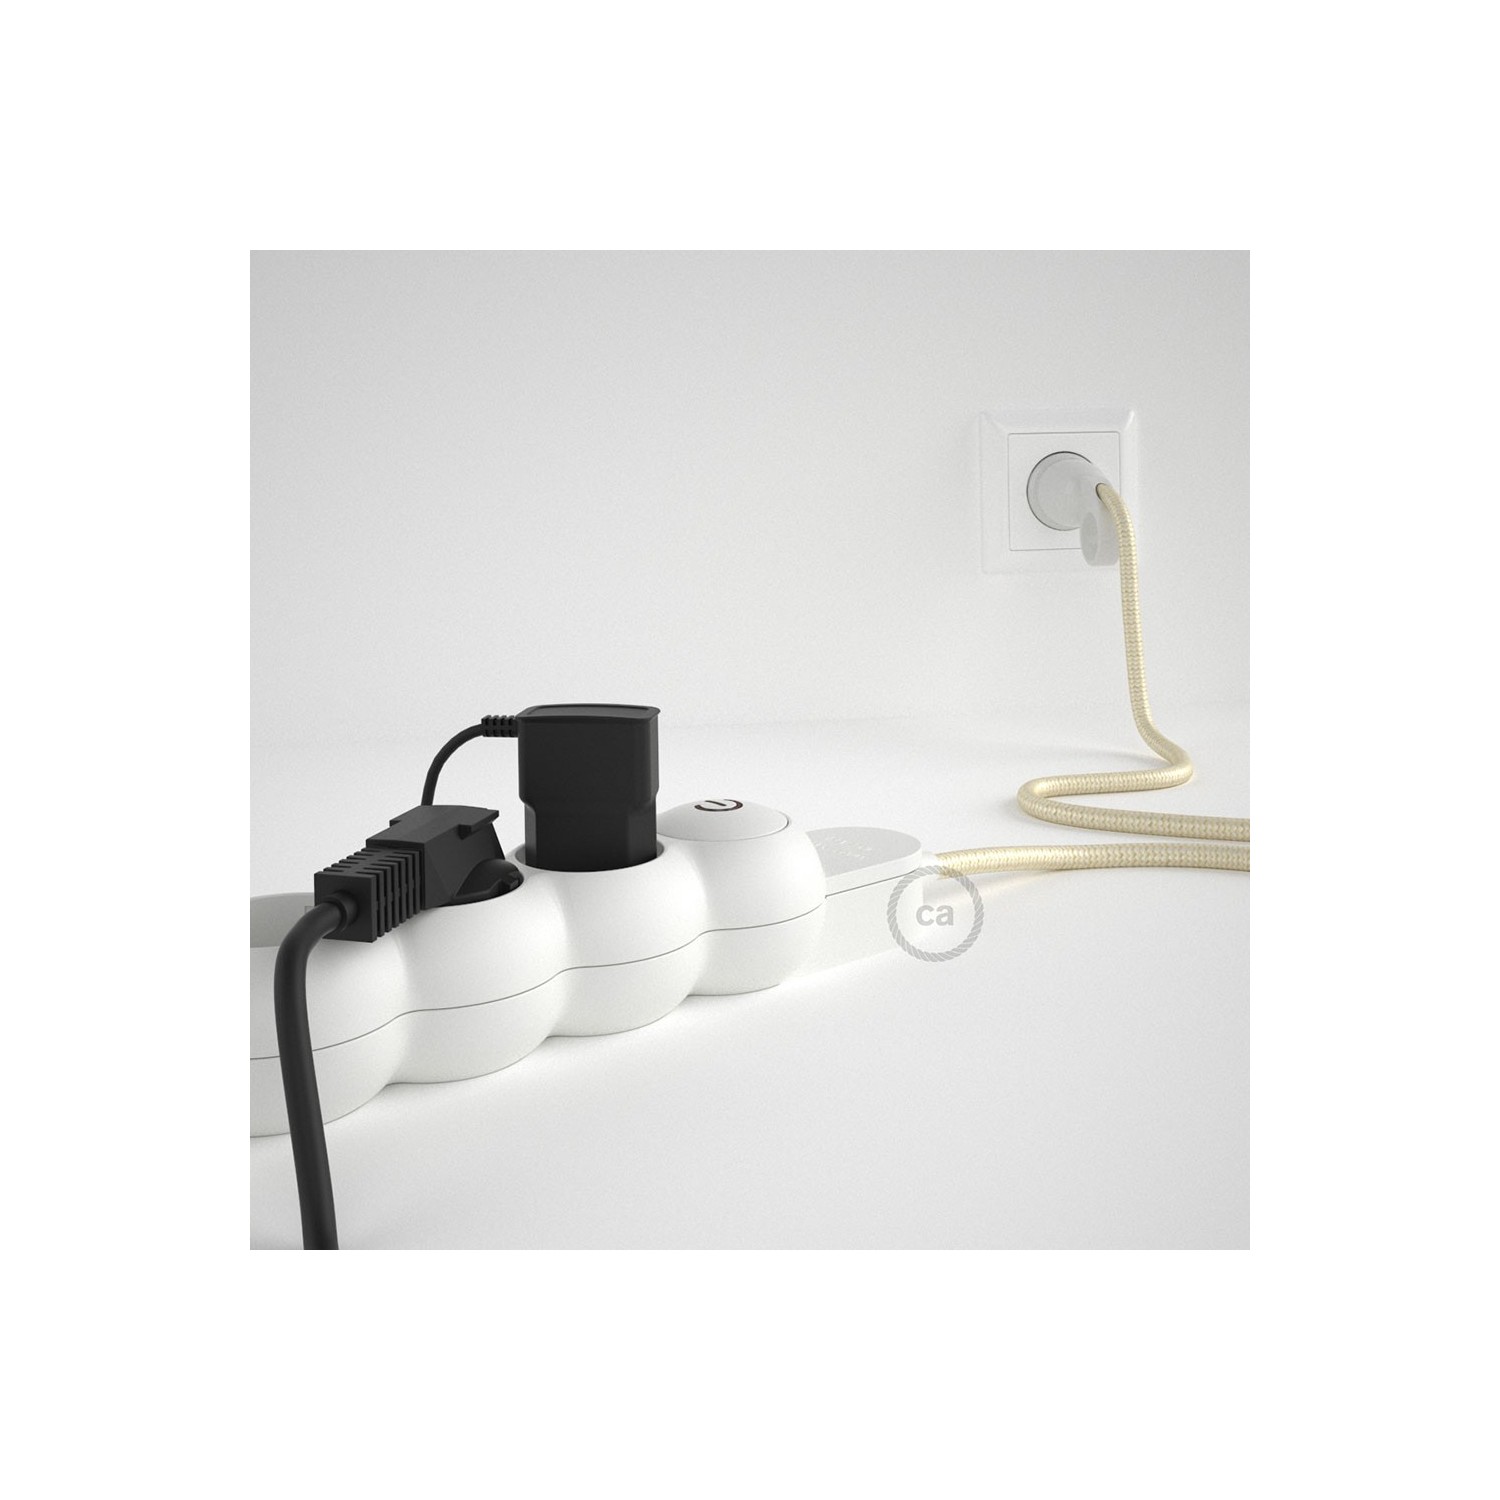 Stekkerdoos met strijkijzersnoer van ivoorkleurige viscose RM00 en randaarde stekker met comfortabele "ring" grip